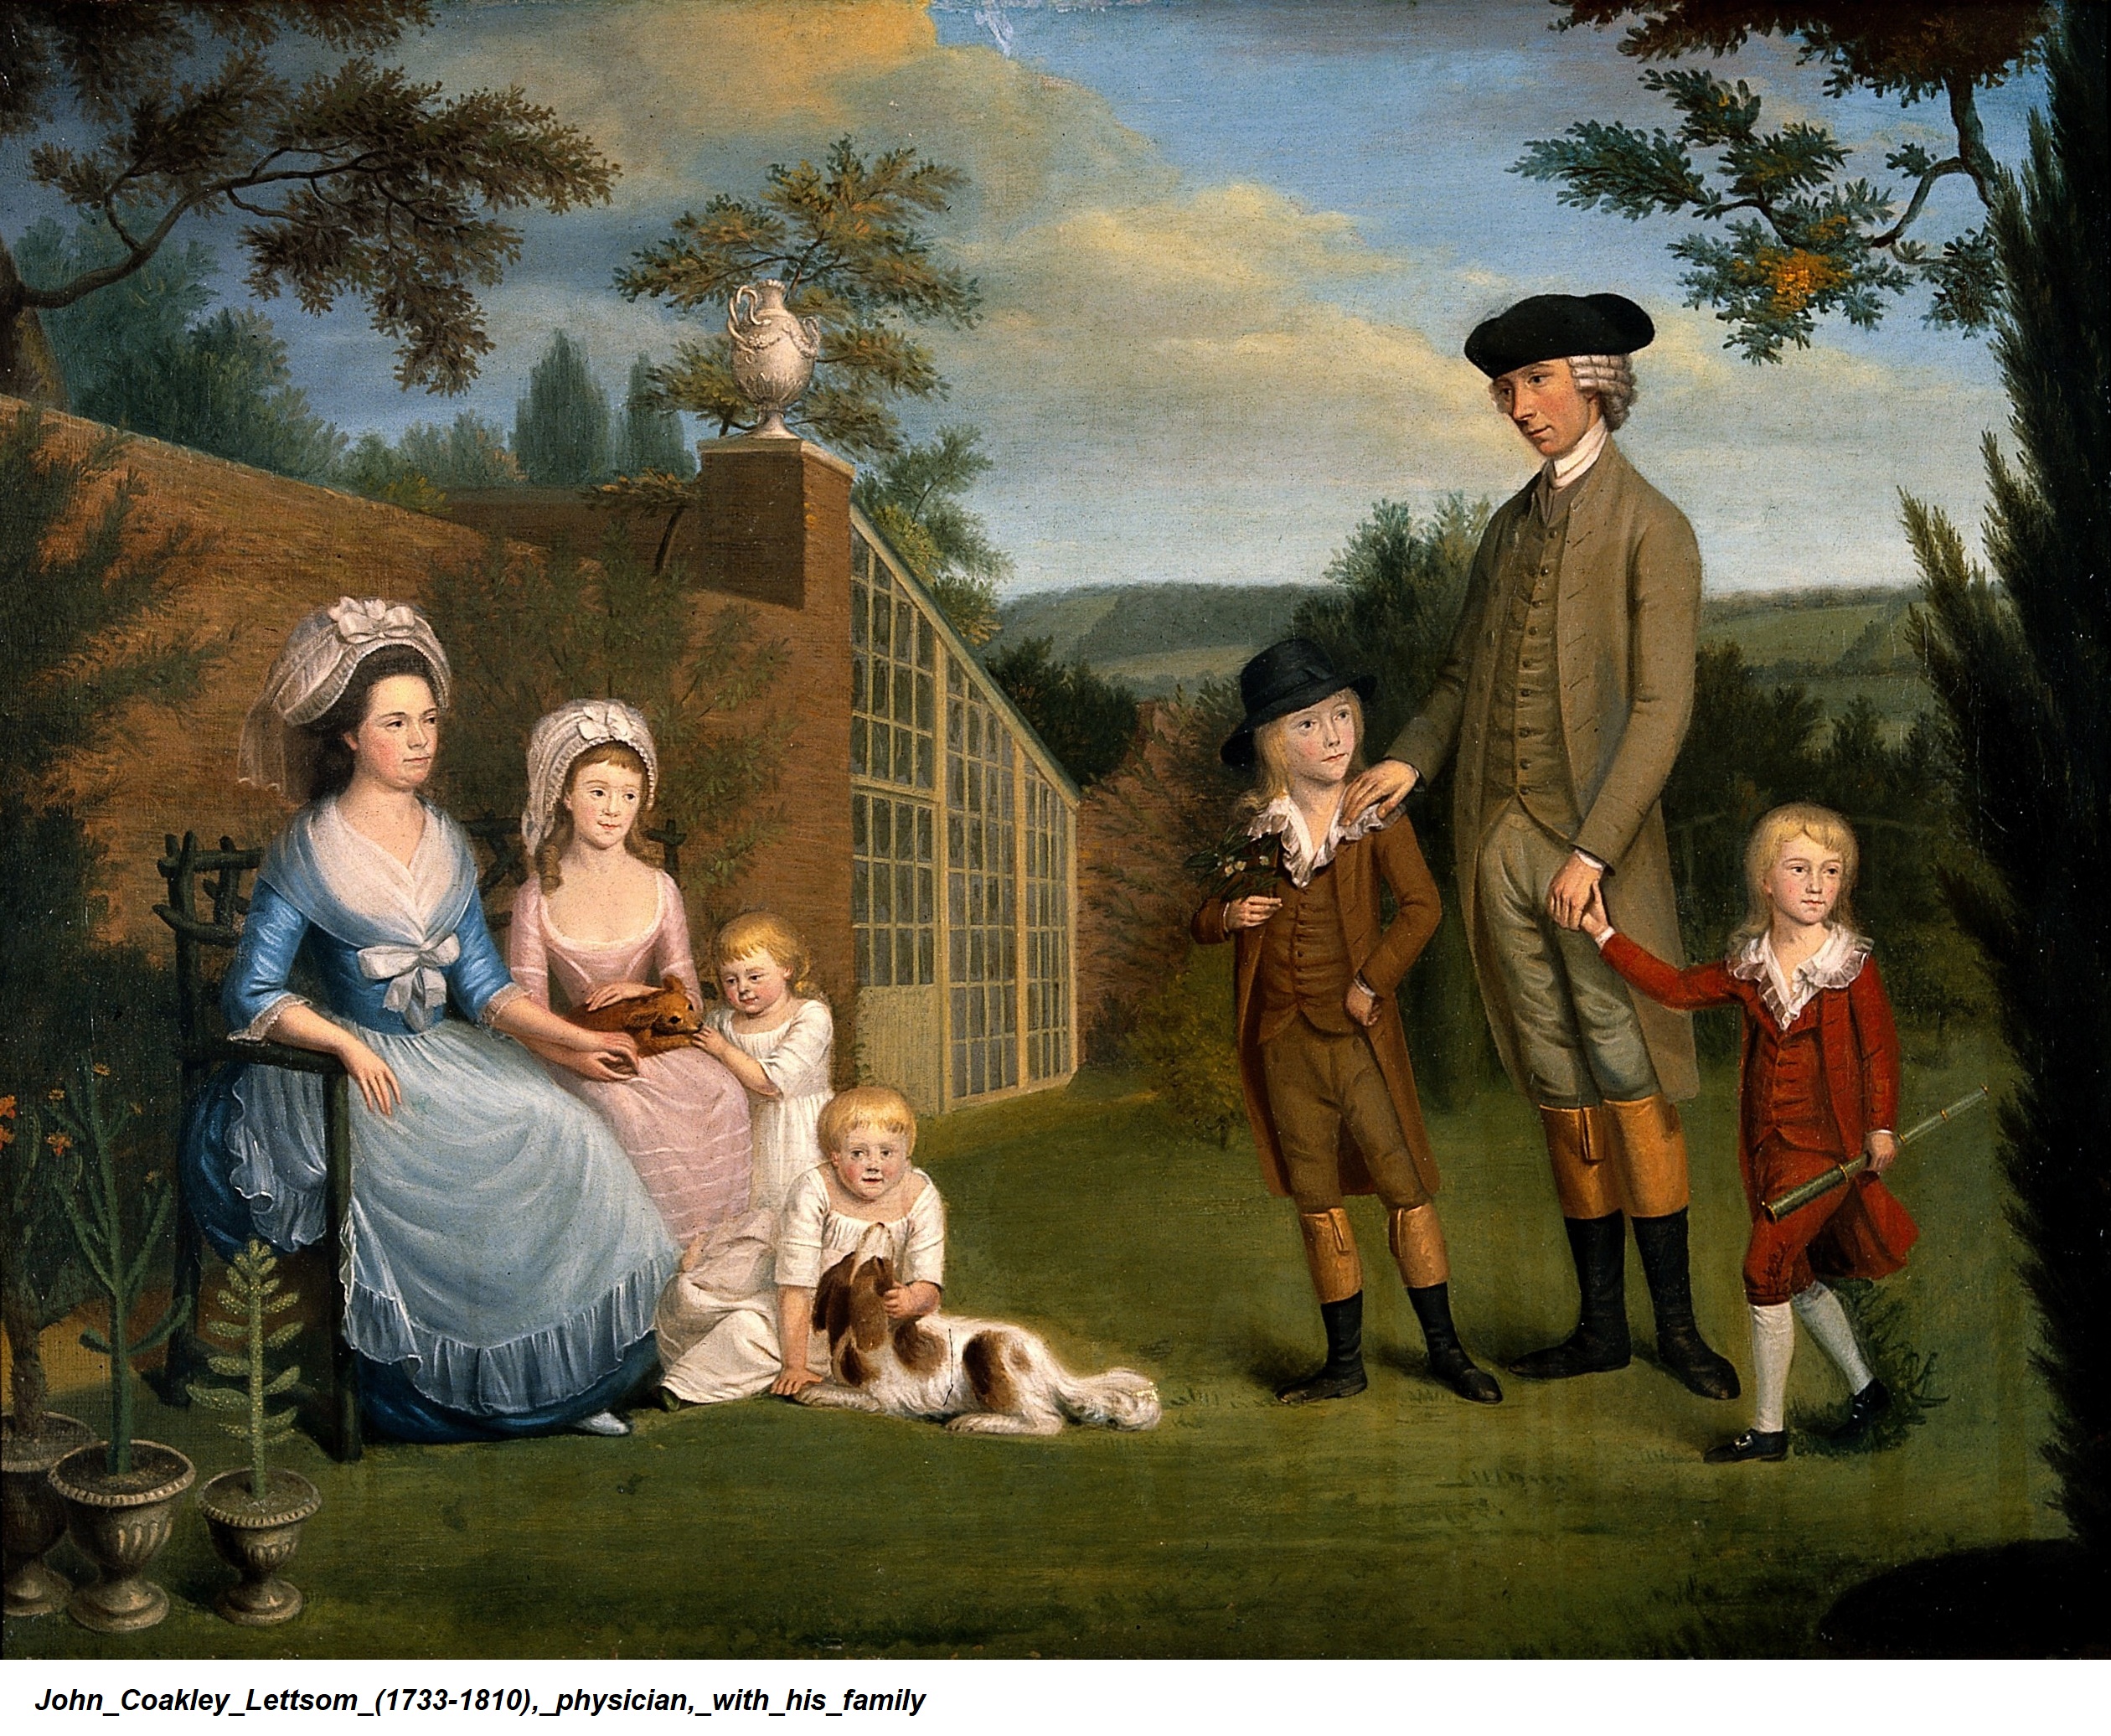 Century family. Семейный портрет Девоншир 1825. Семейные портреты 1810 Англия. Семейные портреты 19 века Британия.